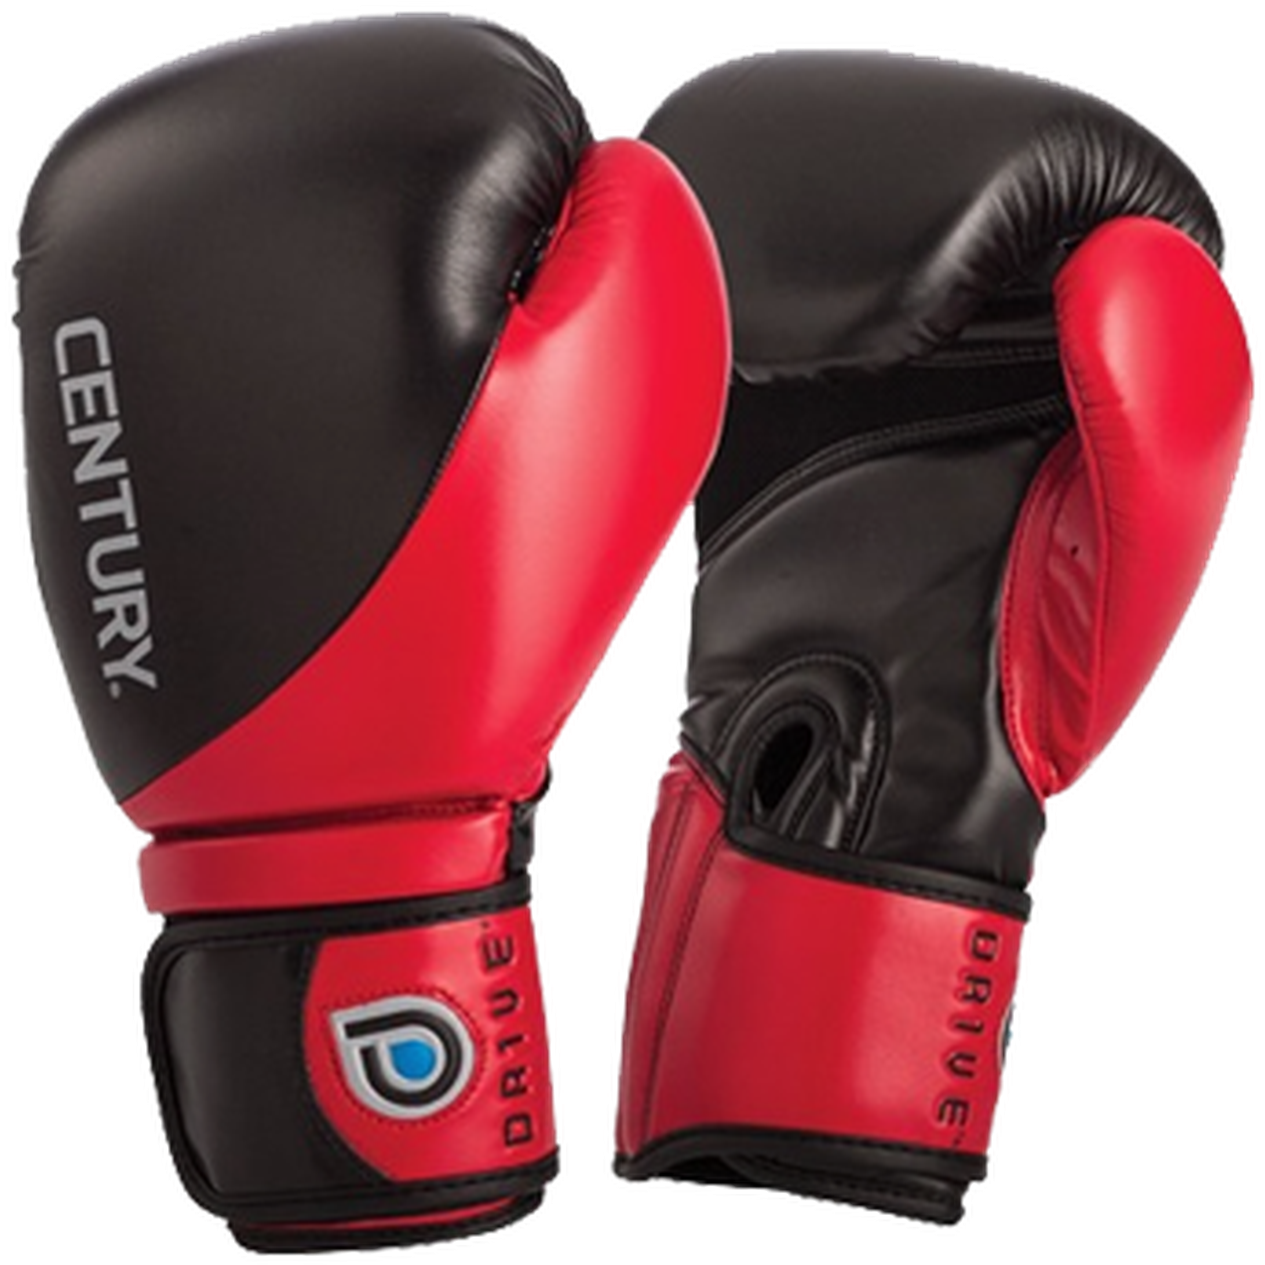 Redand Black Century Boxing Gloves